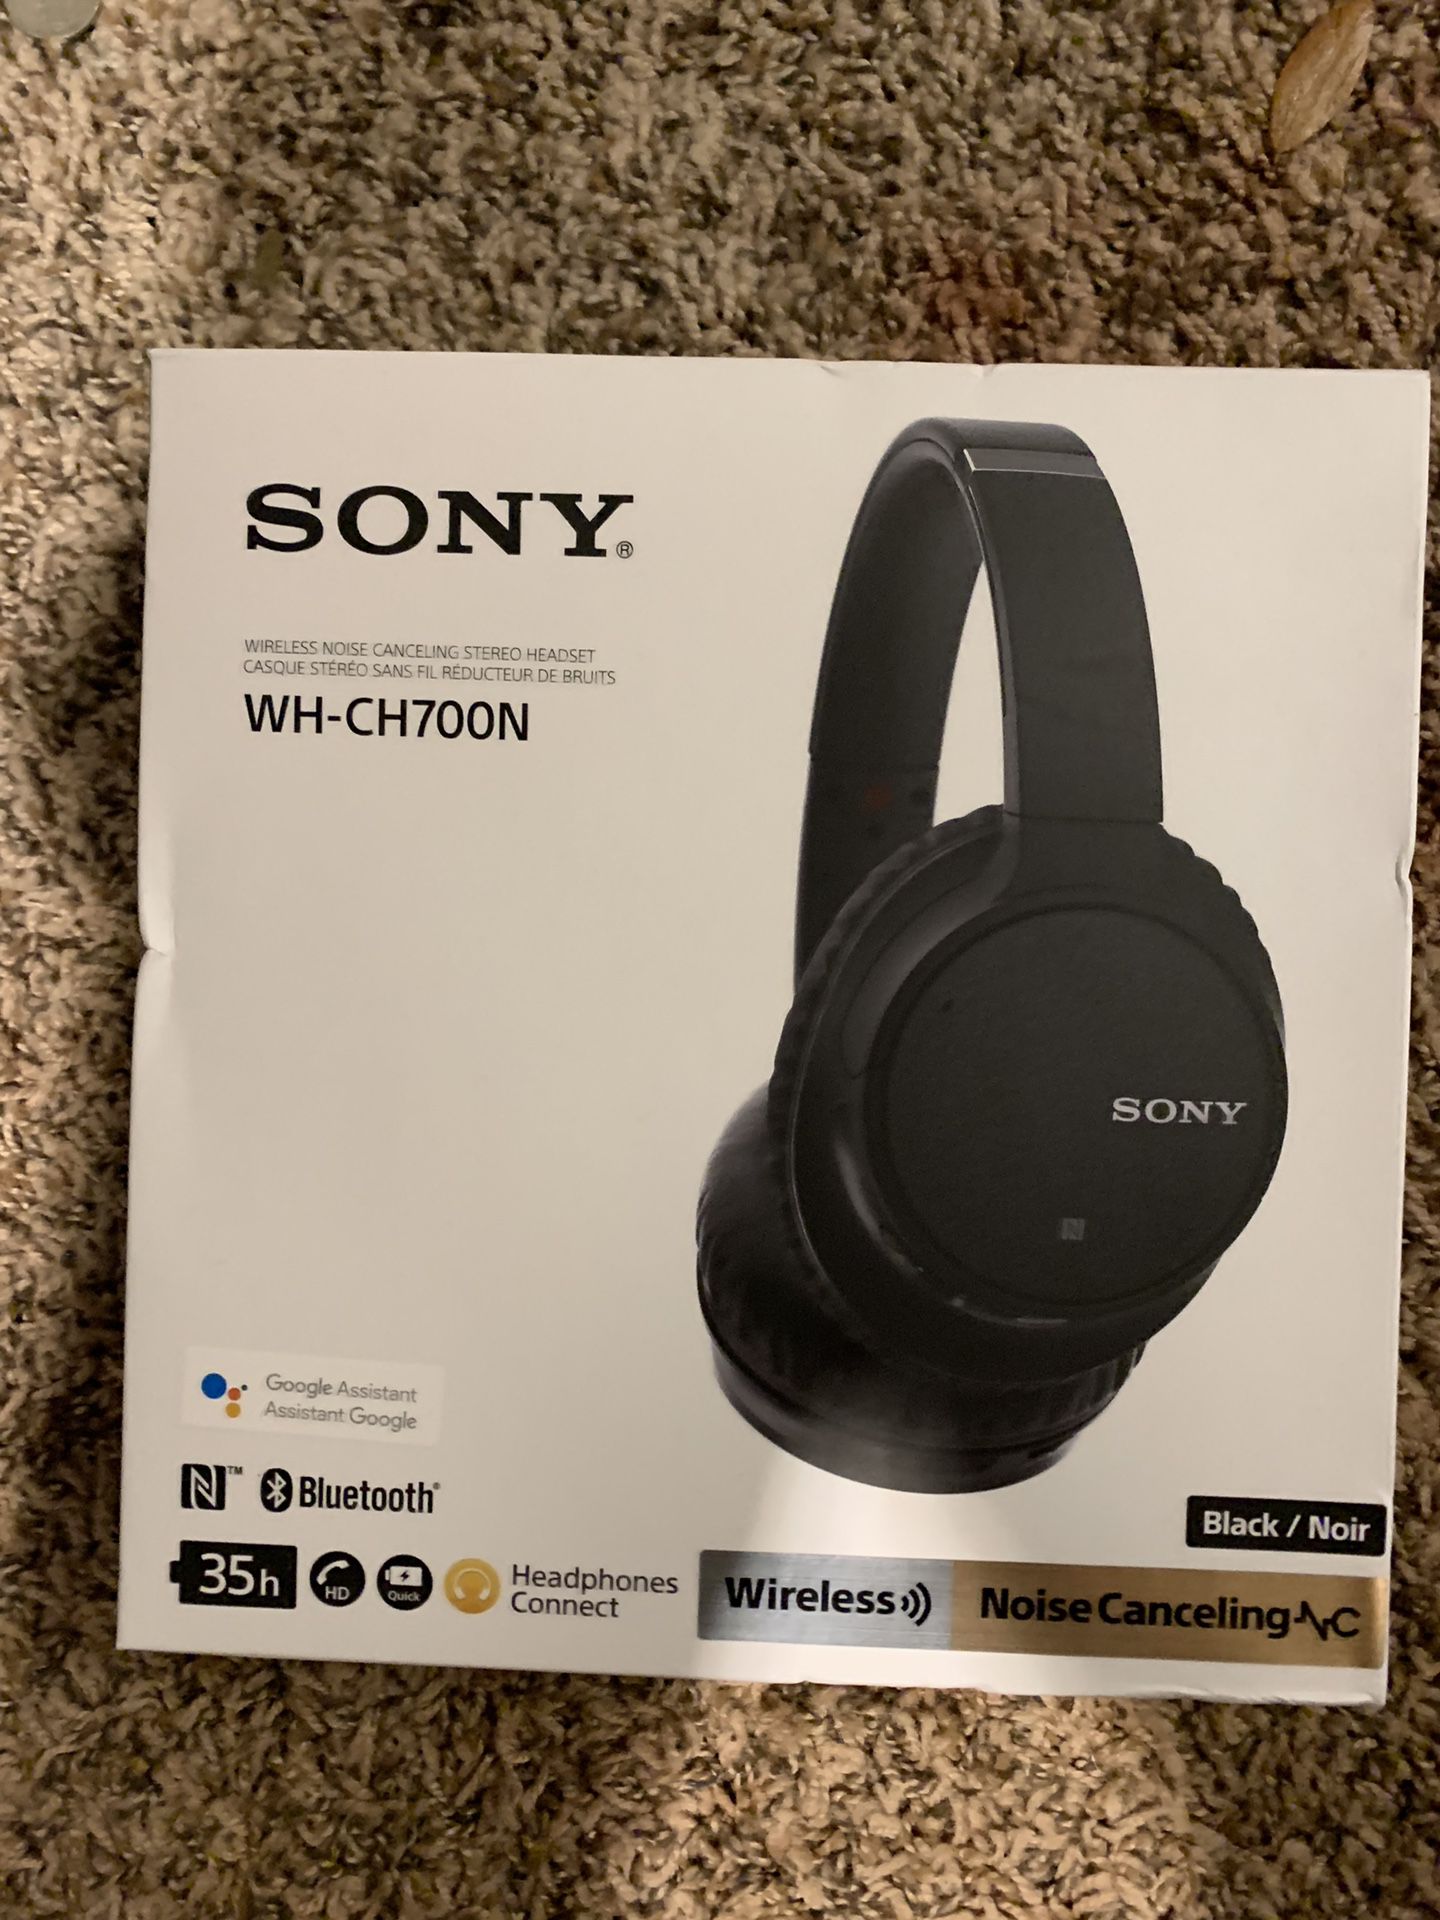 SONY WH-CH700N Wireless Noise Canceling Headphones